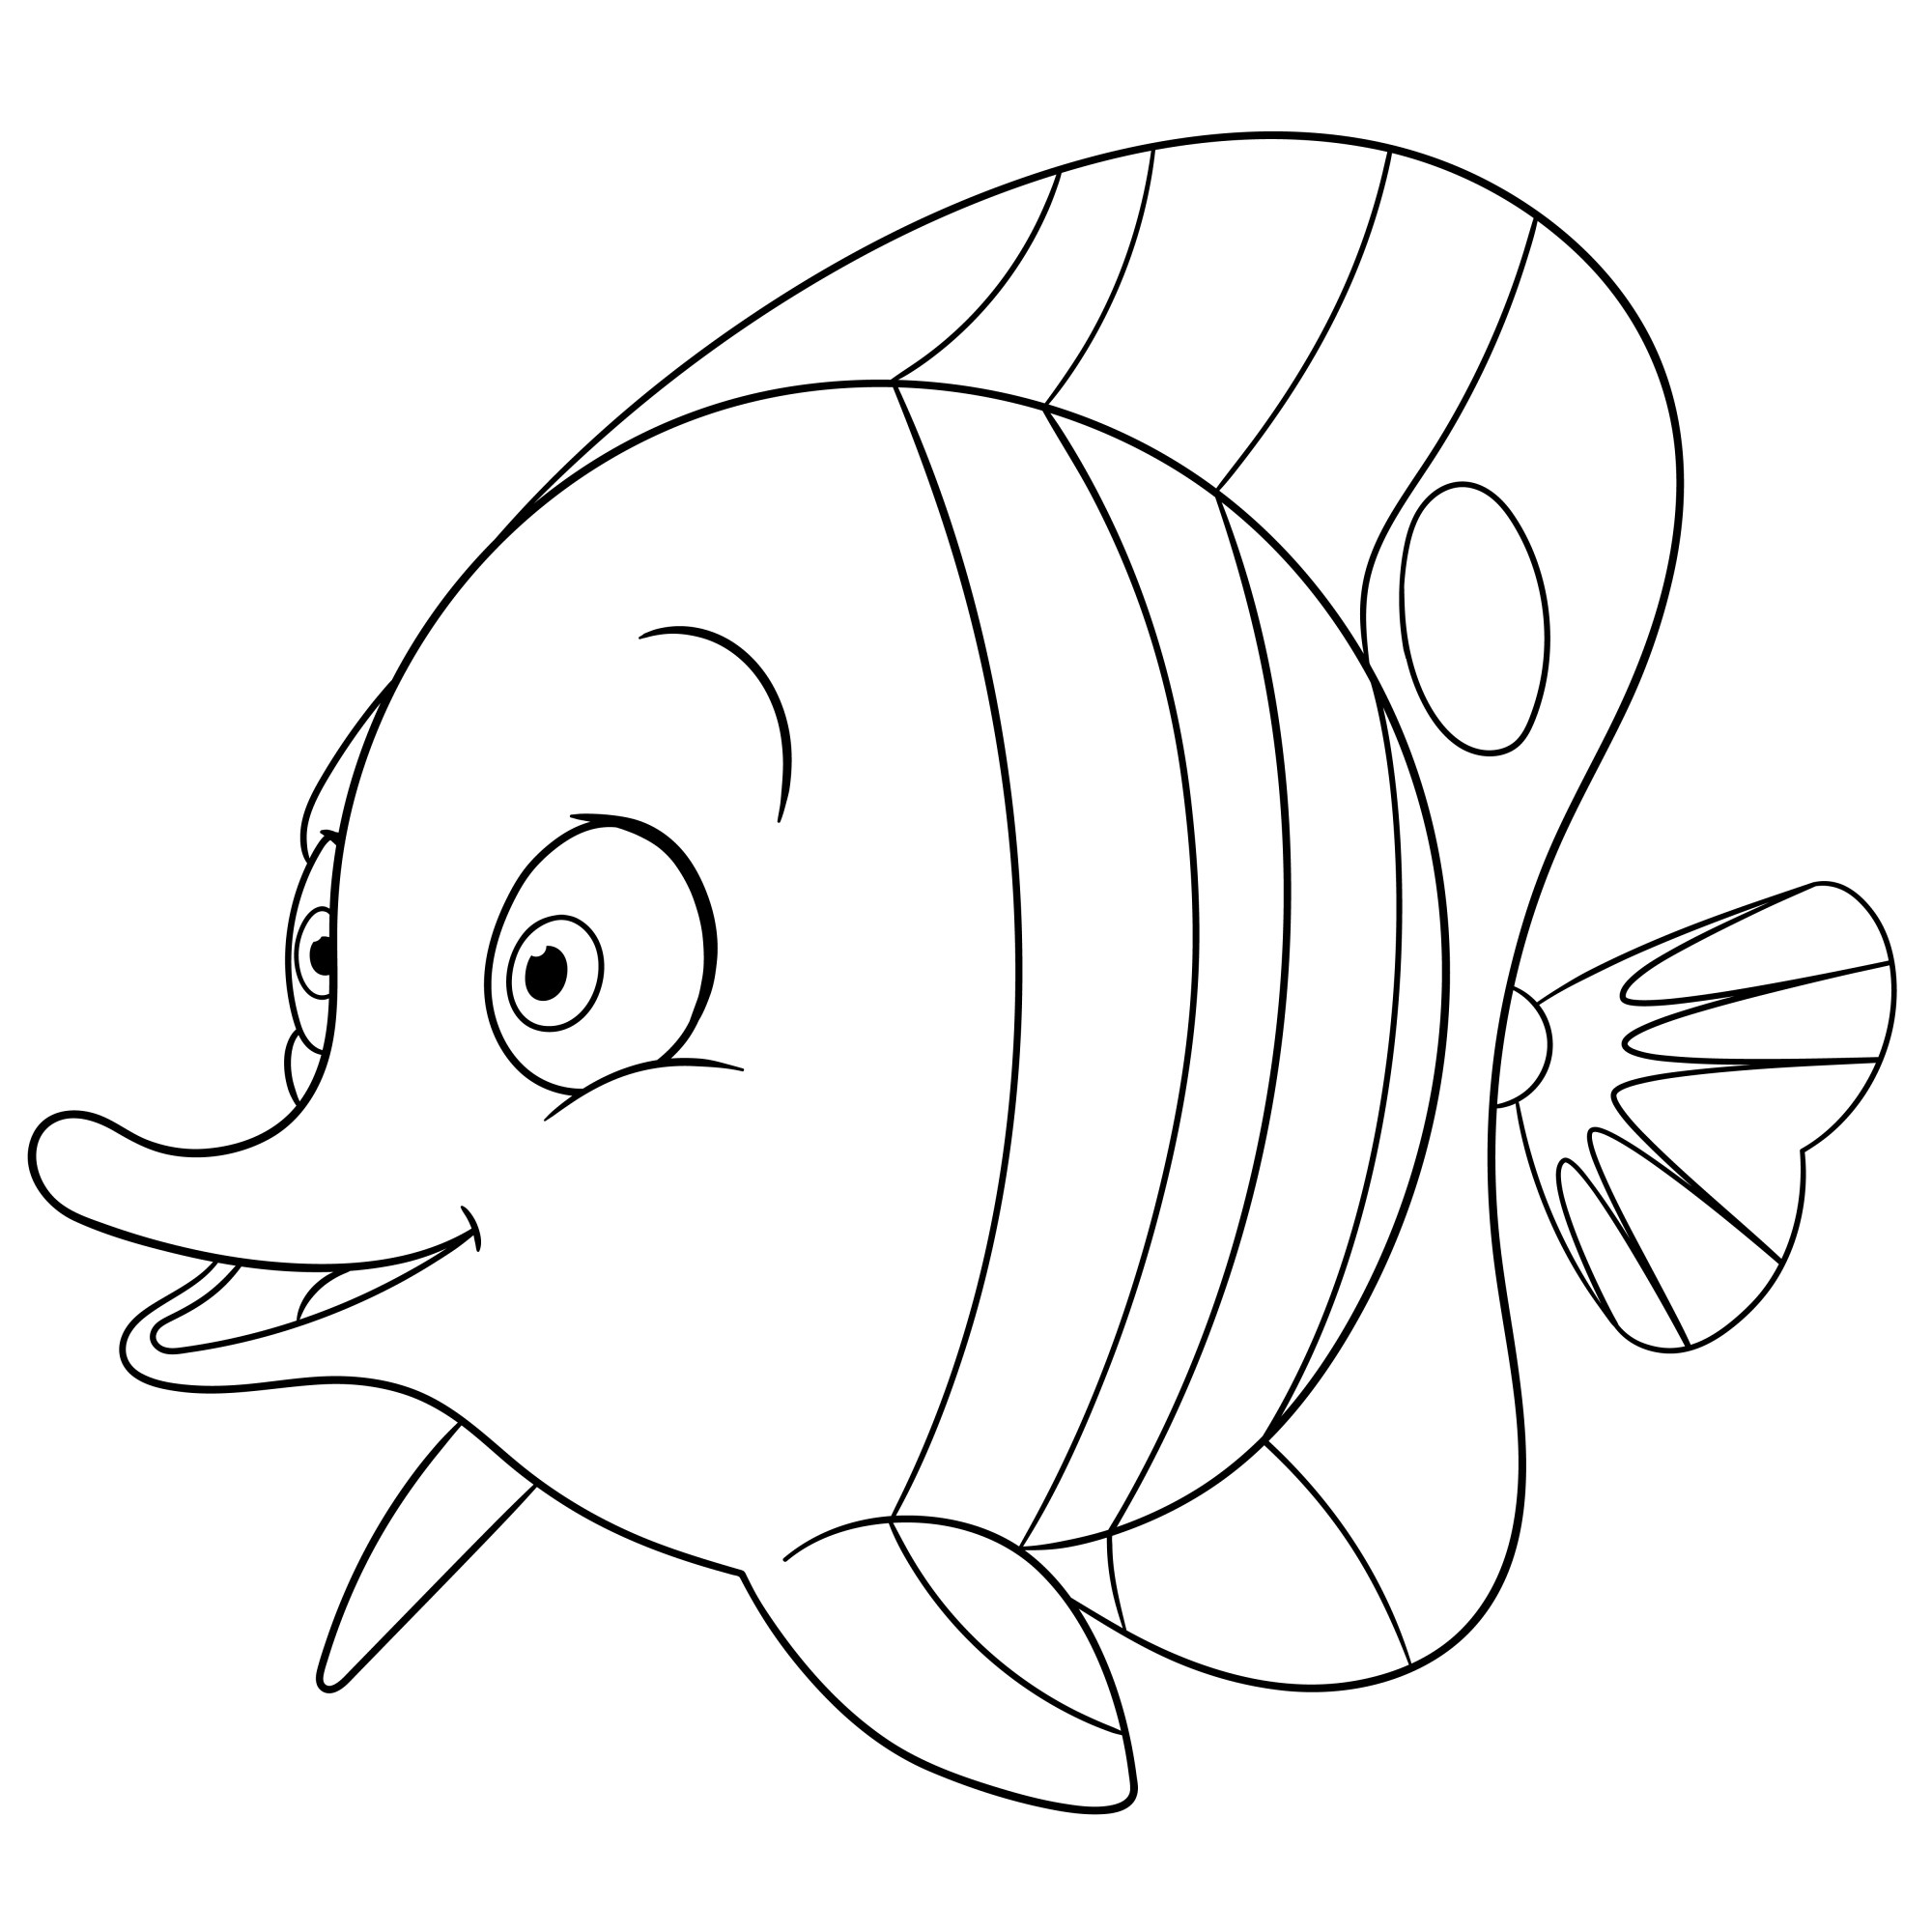 Раскраска для детей: мультяшная счастливая рыба-бабочка